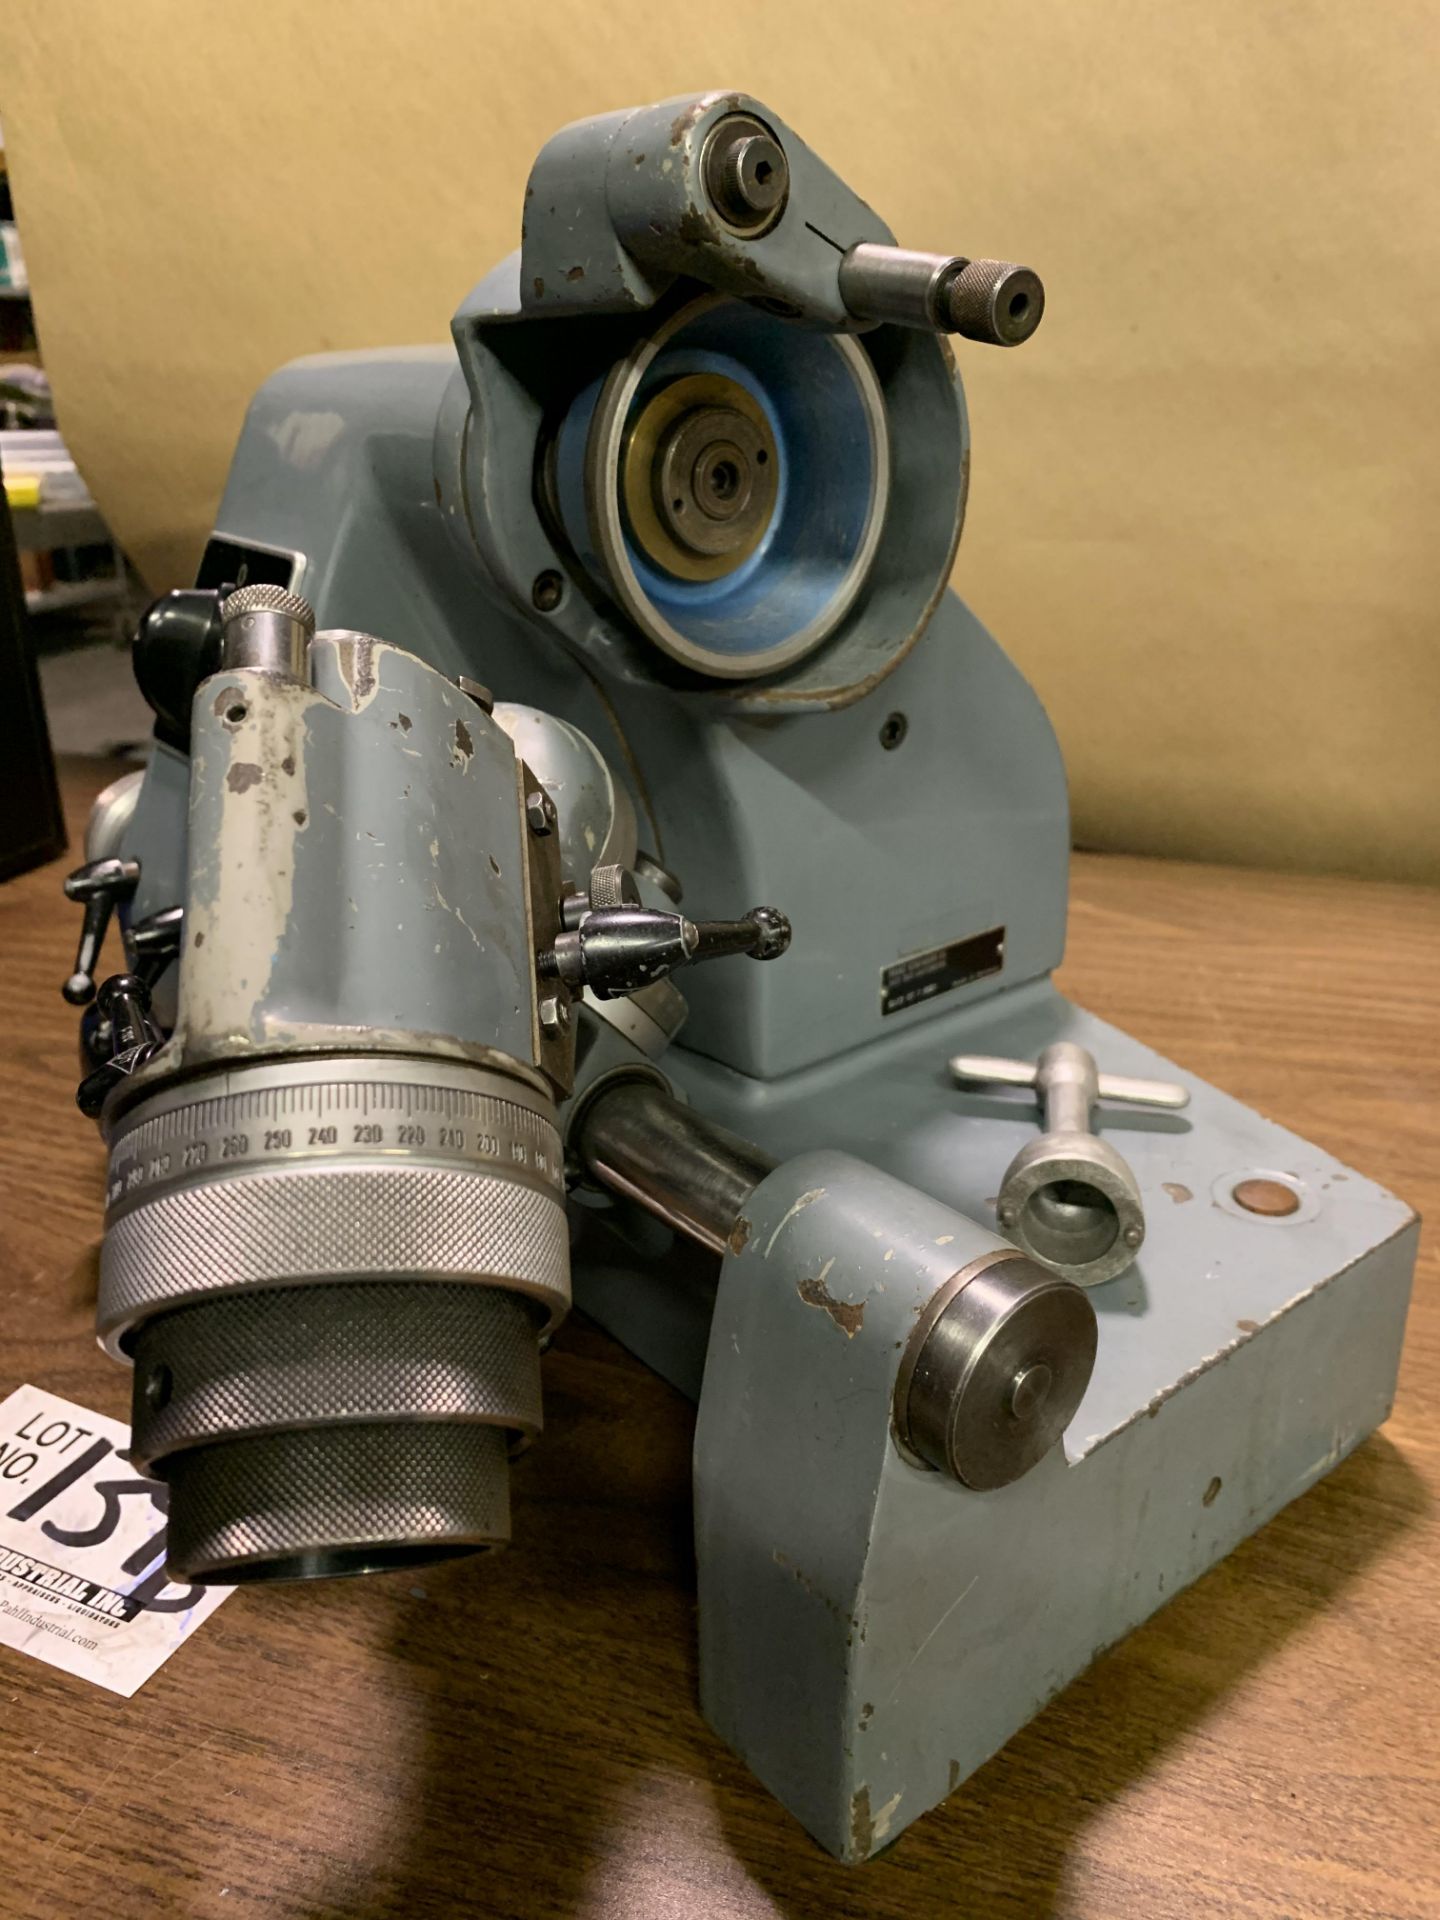 Kuhlmann Cutter Grinding machine Model 3422 - Image 2 of 3